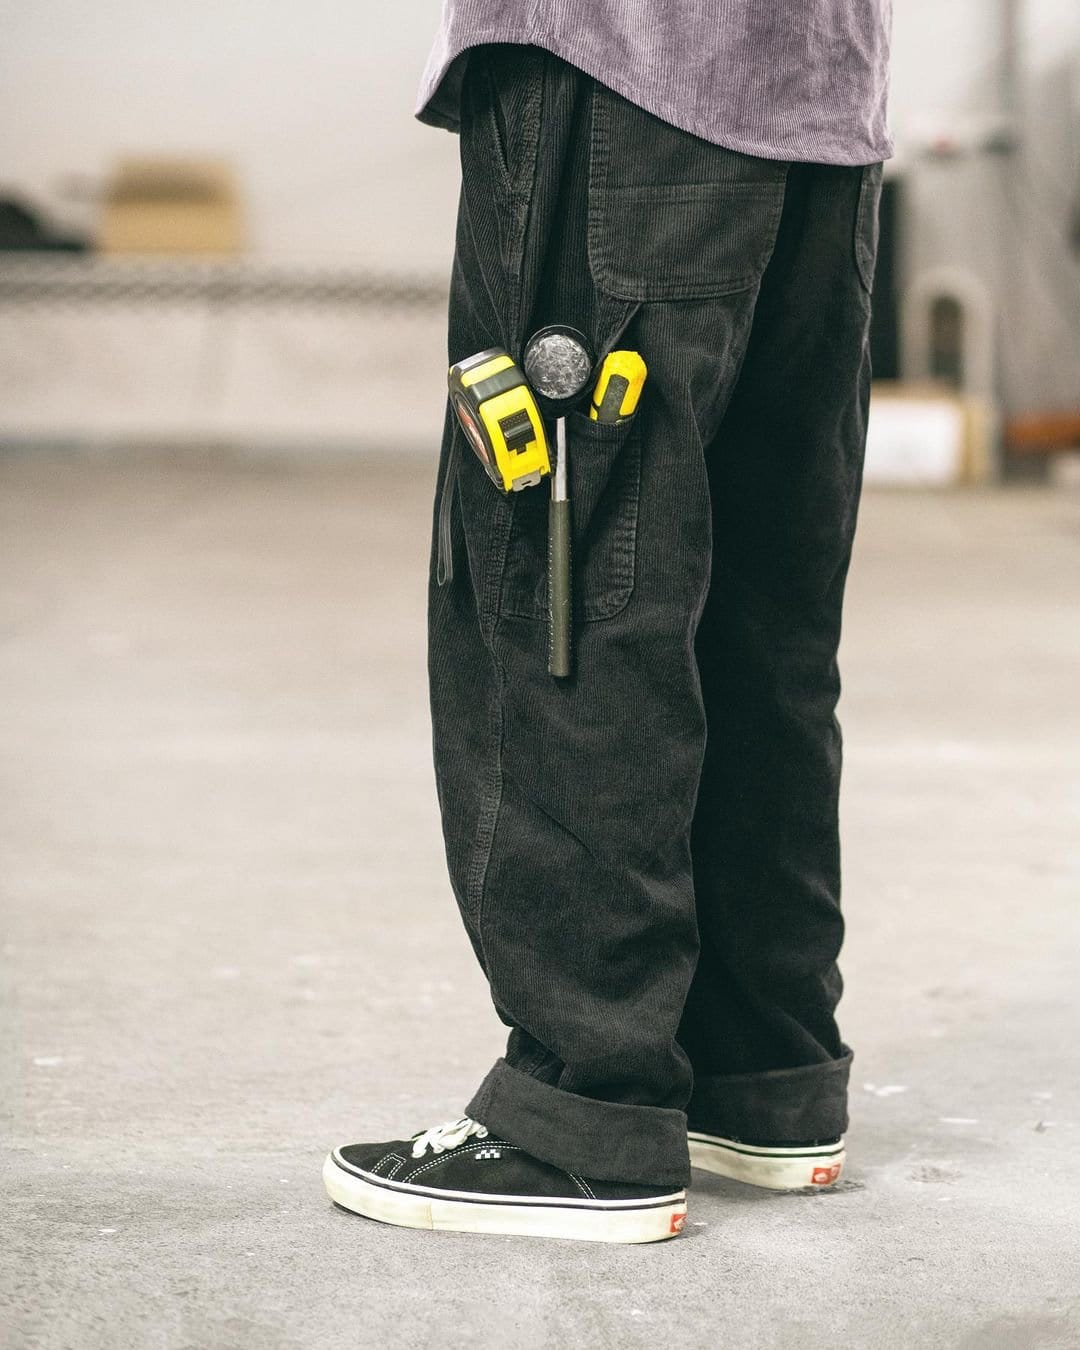 Men's Wrangler RIGGS Workwear Carpenter Pants